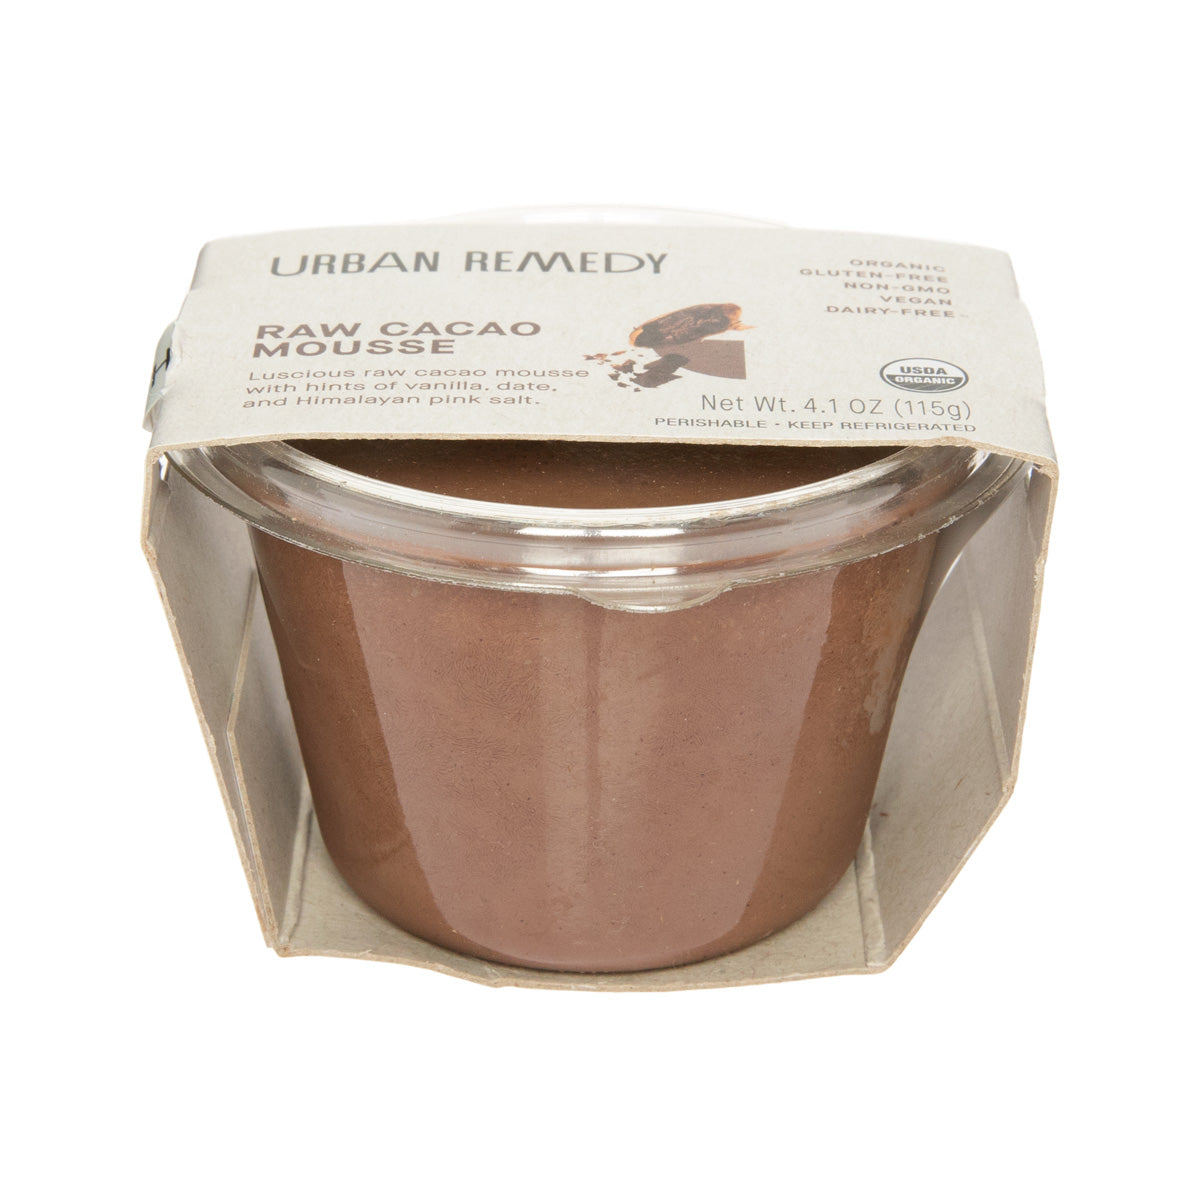 Urban Remedy Organic Raw Cacao Mousse 4.1 OZ